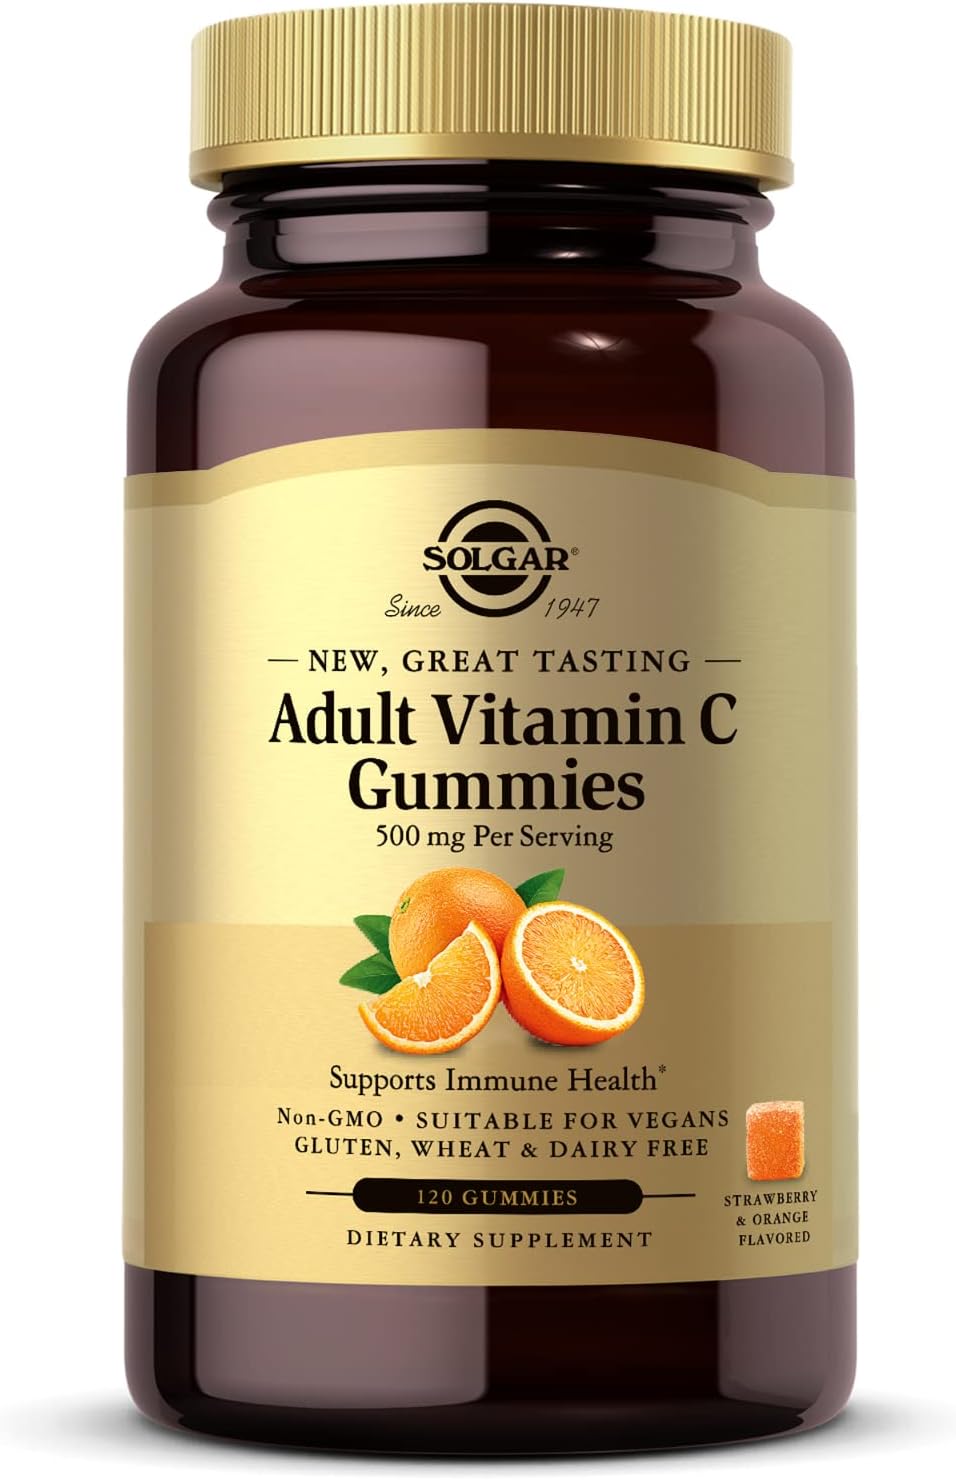 Solgar Adult Vitamin C 500 mg Gummies, Great-Tasting Strawberry Orange avor, Supports Immune Health, Non-GMO, Vegan, Gluten & Dairy Free, 30 Servings, 120 Count